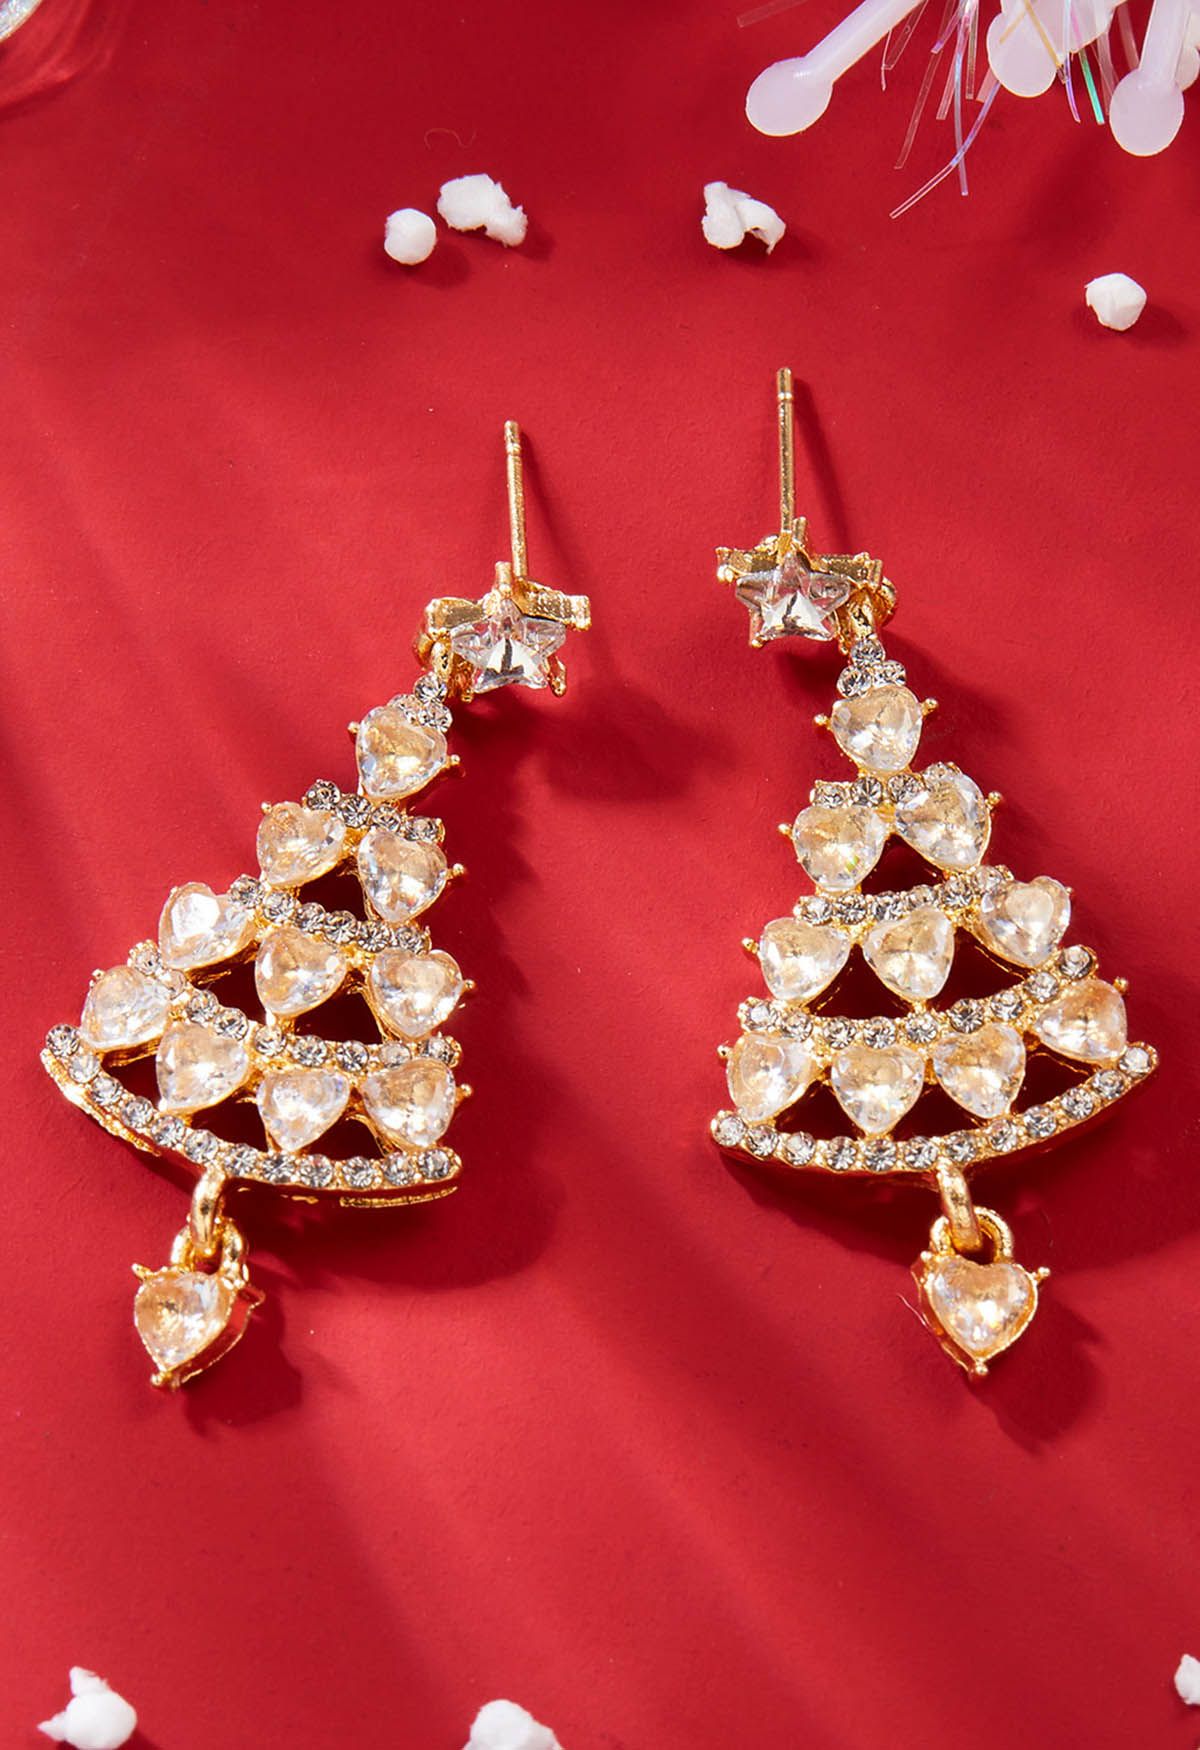 Full Rhinestone Christmas Tree Earrings in Gold